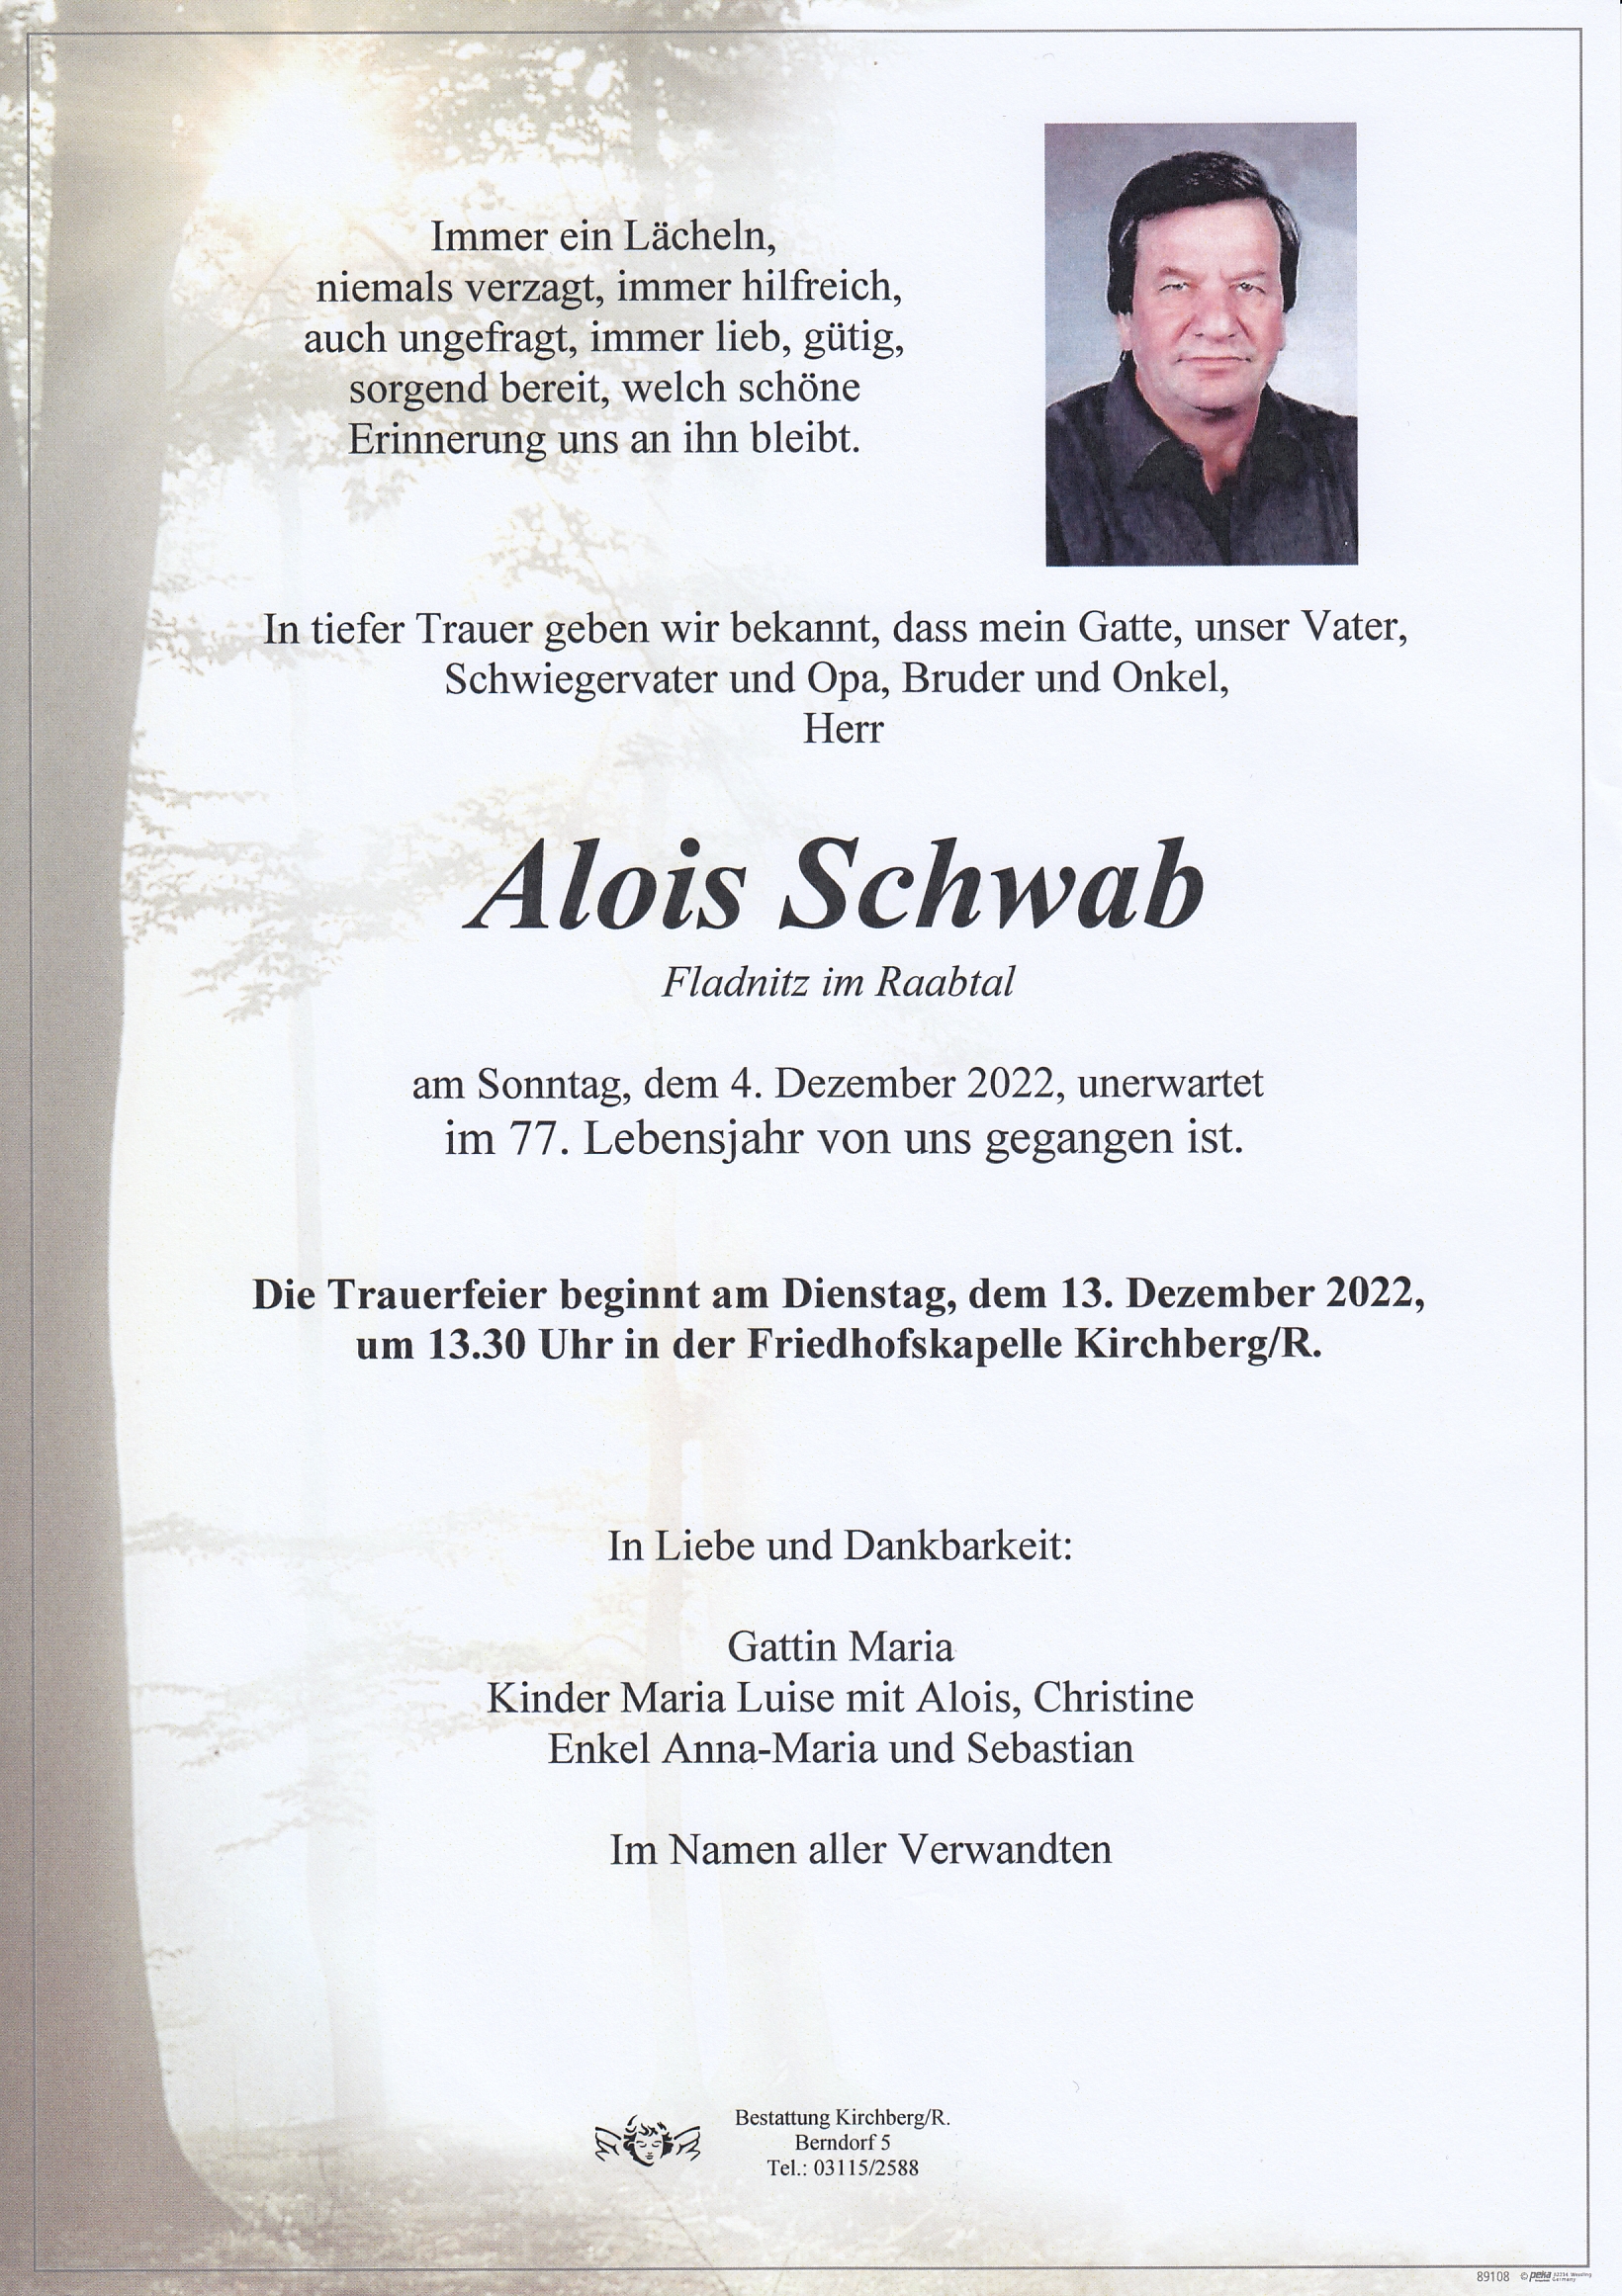 Alois Schwab